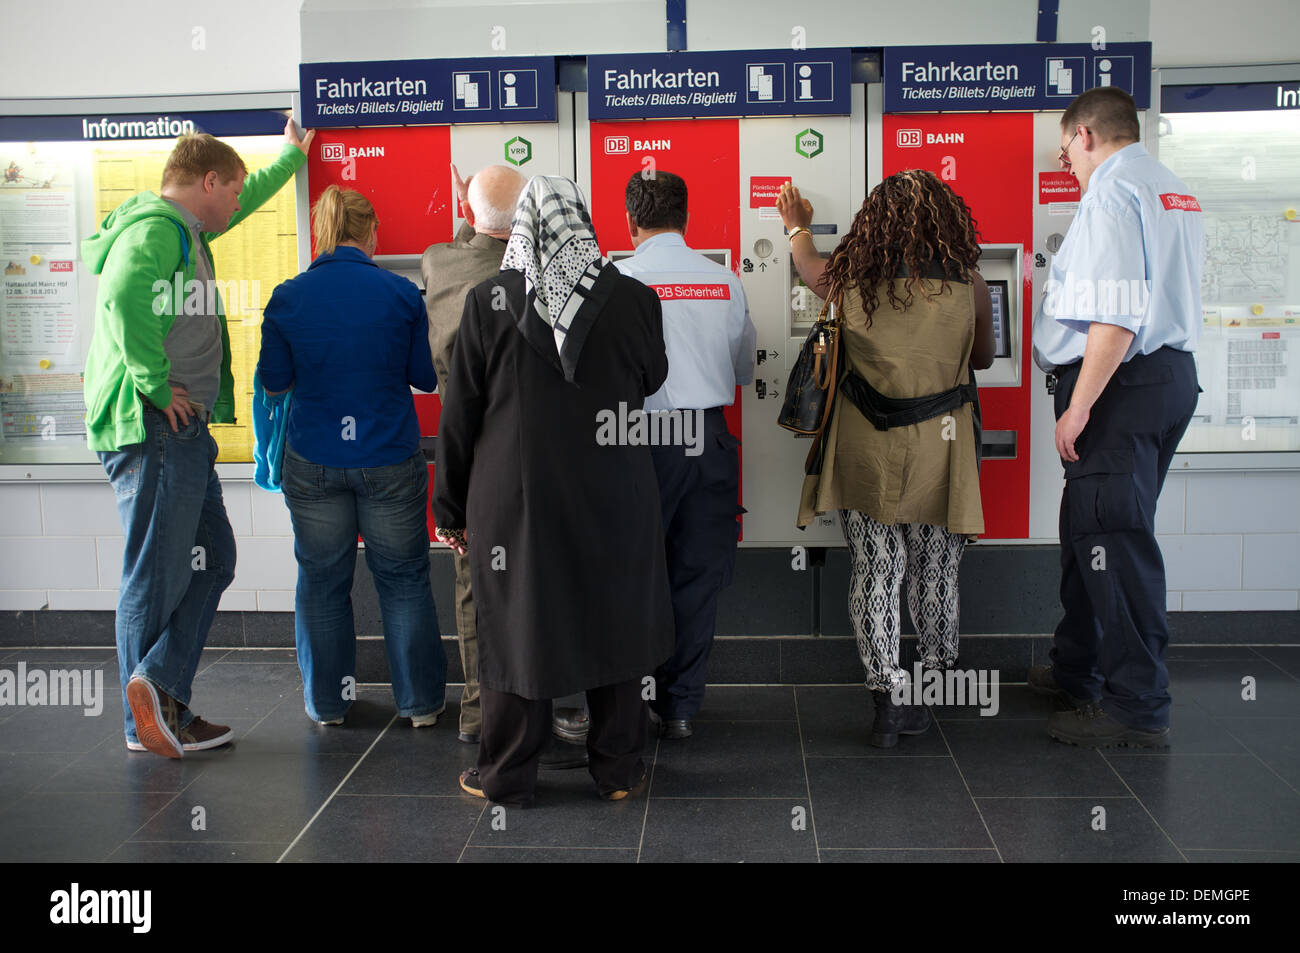 Fahrkarten (ticket machine) Solingen railway station Germany Stock Photo